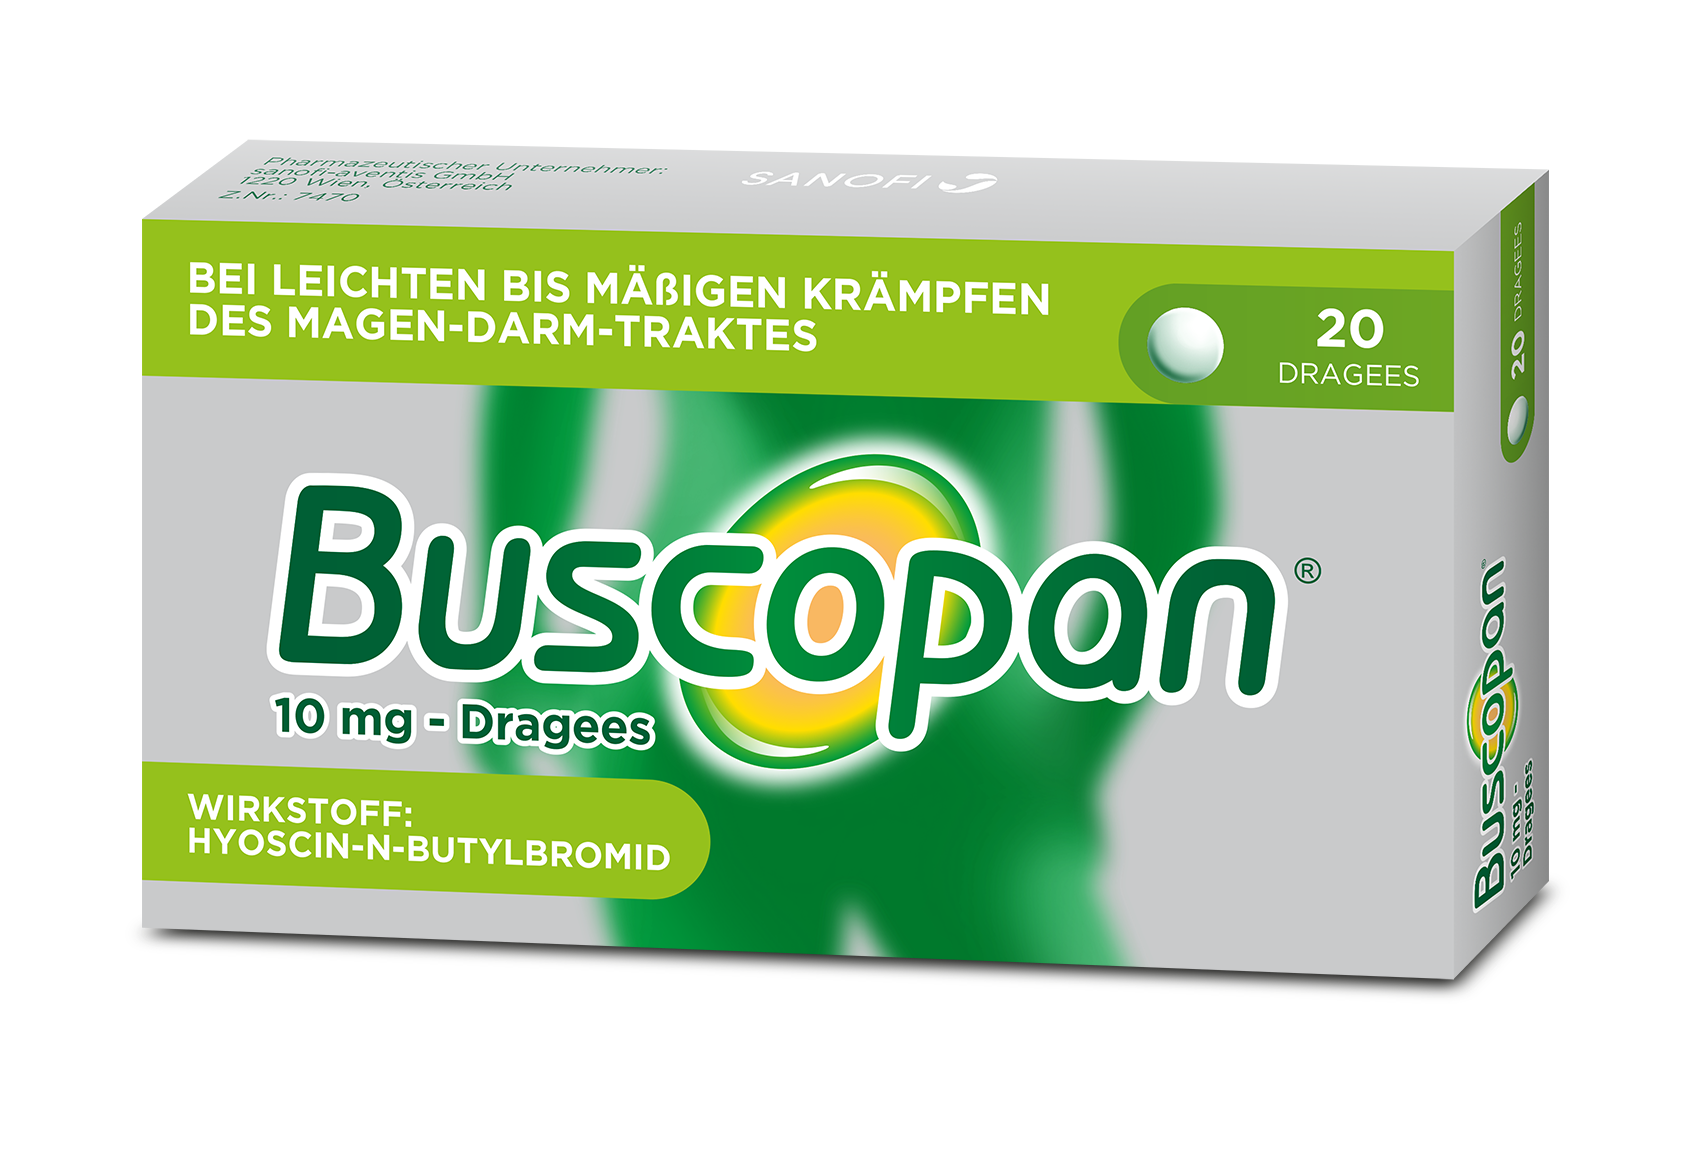 Buscopan® 10 mg – Dragees